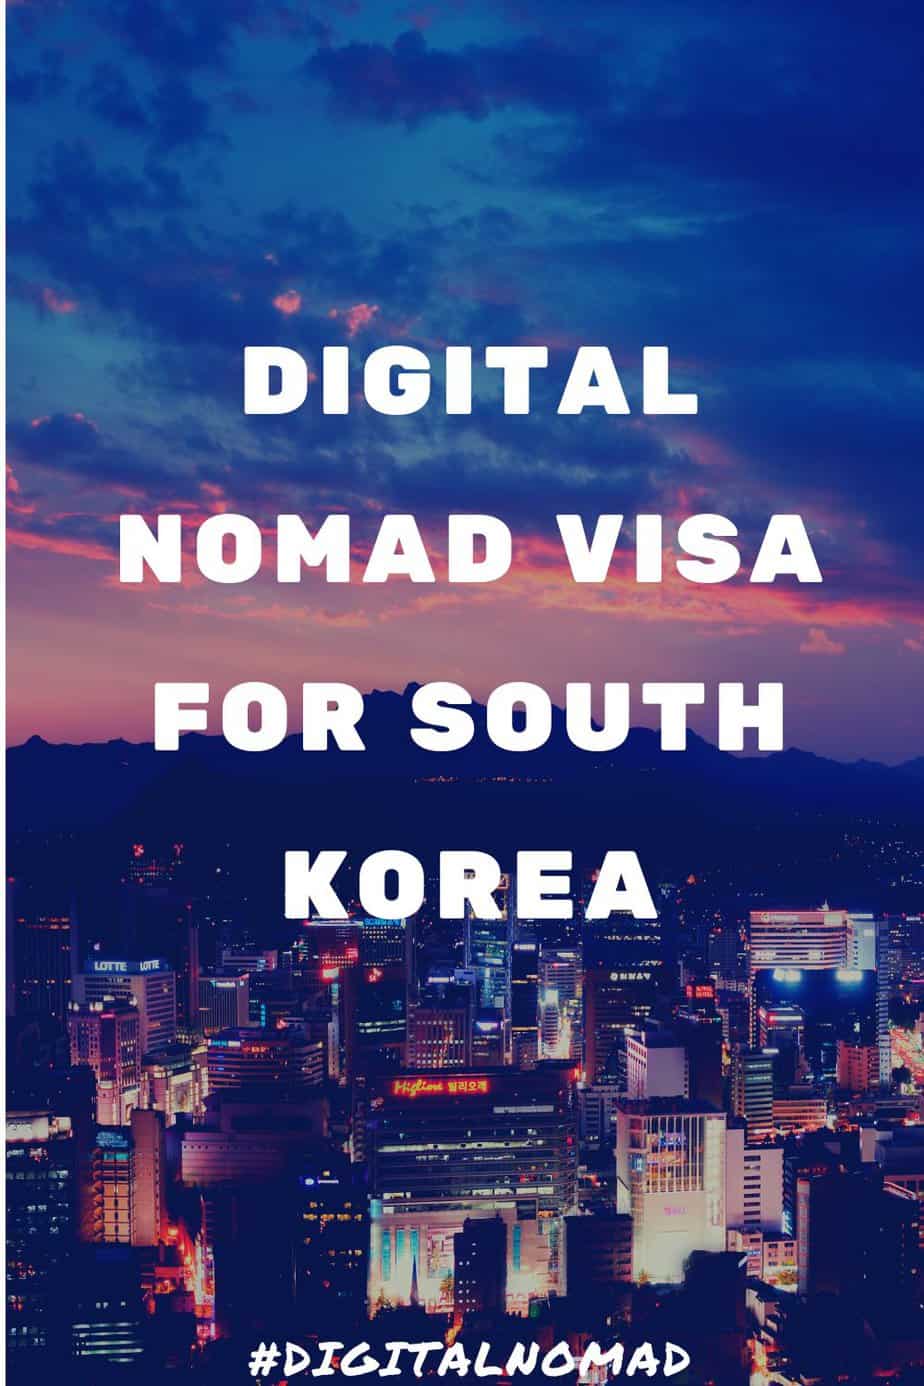 South Korea Digital Nomad Visa – The latest information